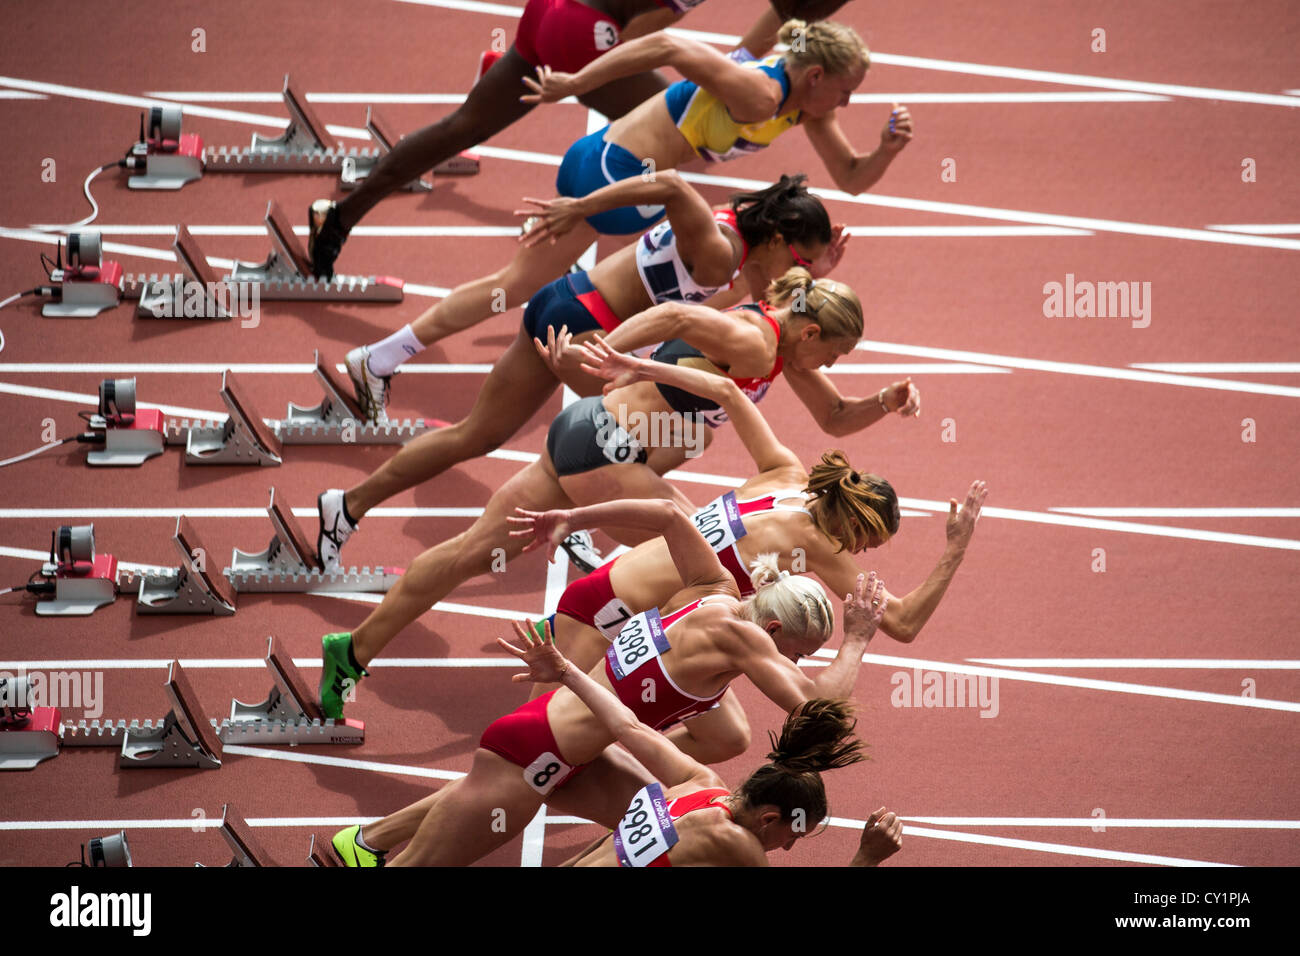 Start of women's heptathlon 100m race at the Olympic Summer Games, London 2012 Stock Photo